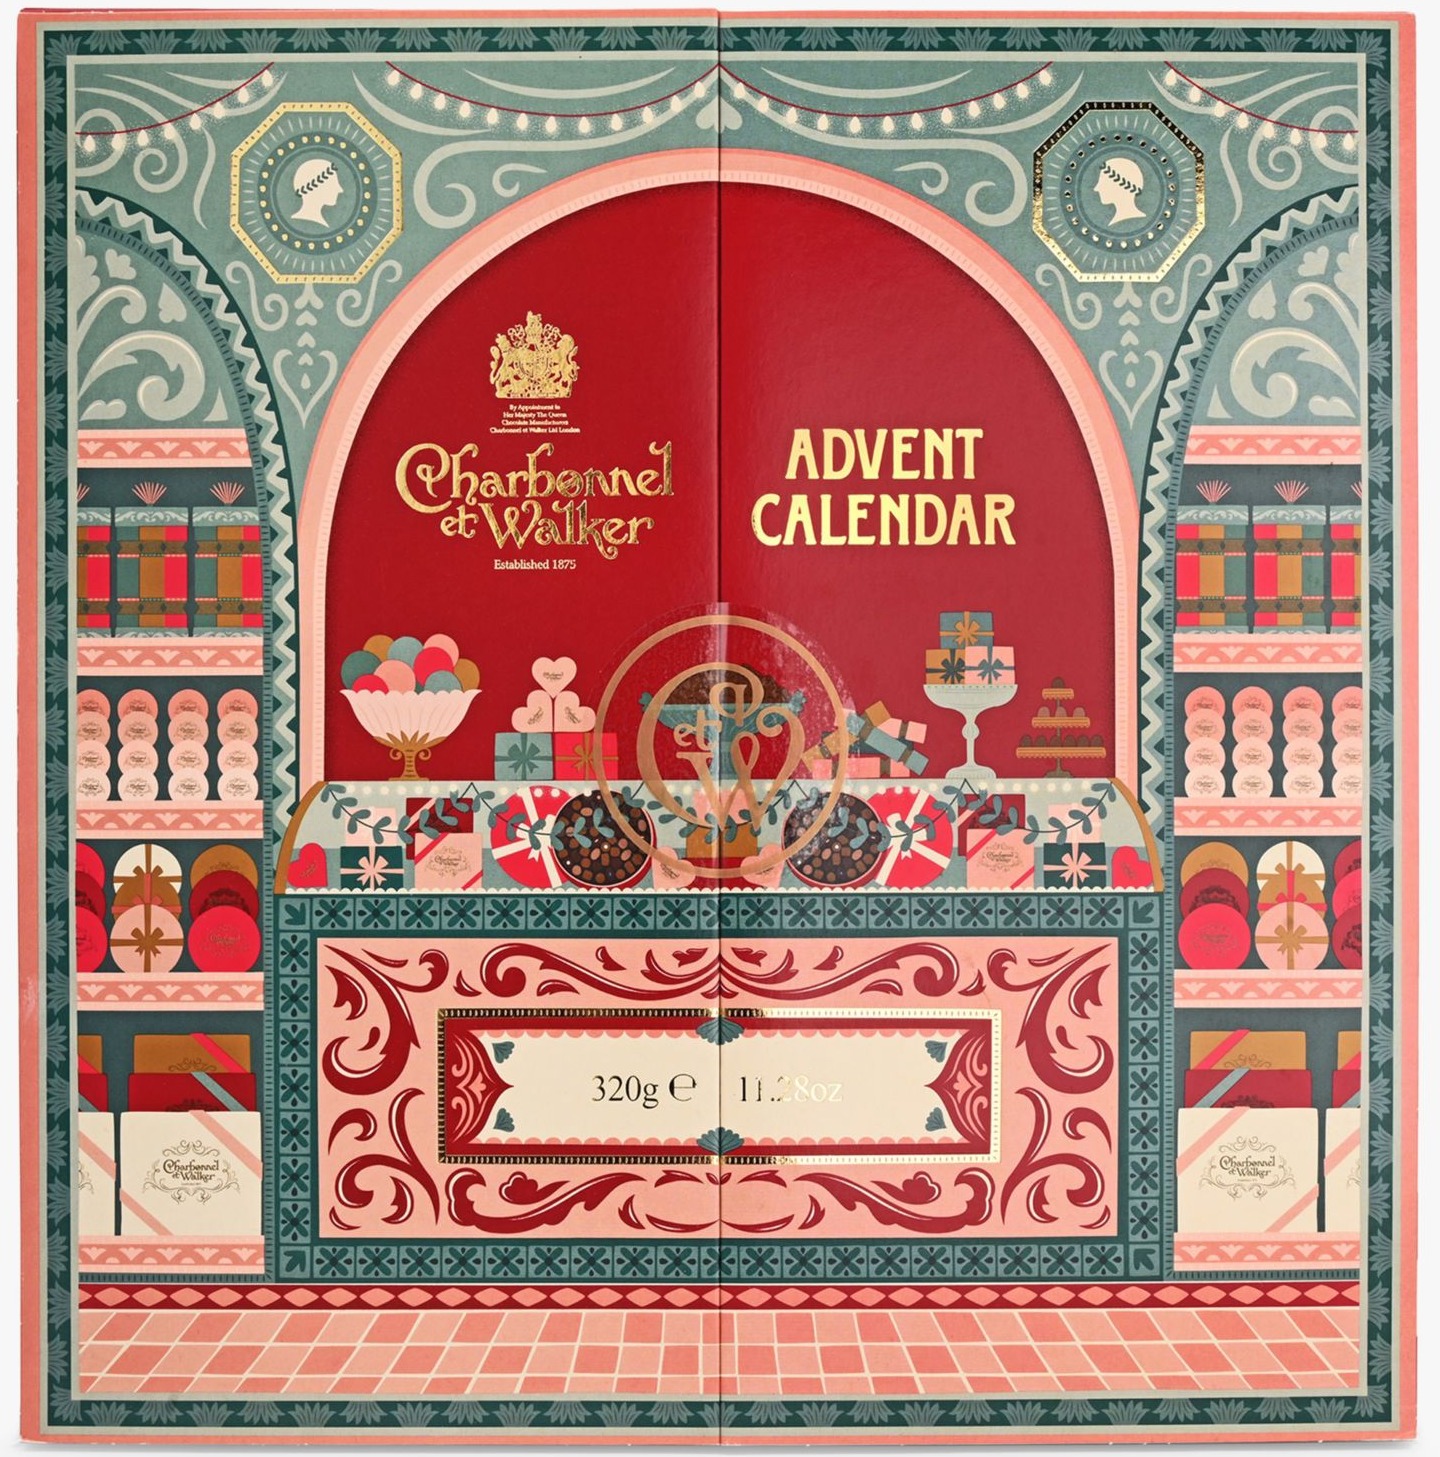 Charbonnel et Walker Advent Calendar, 325g